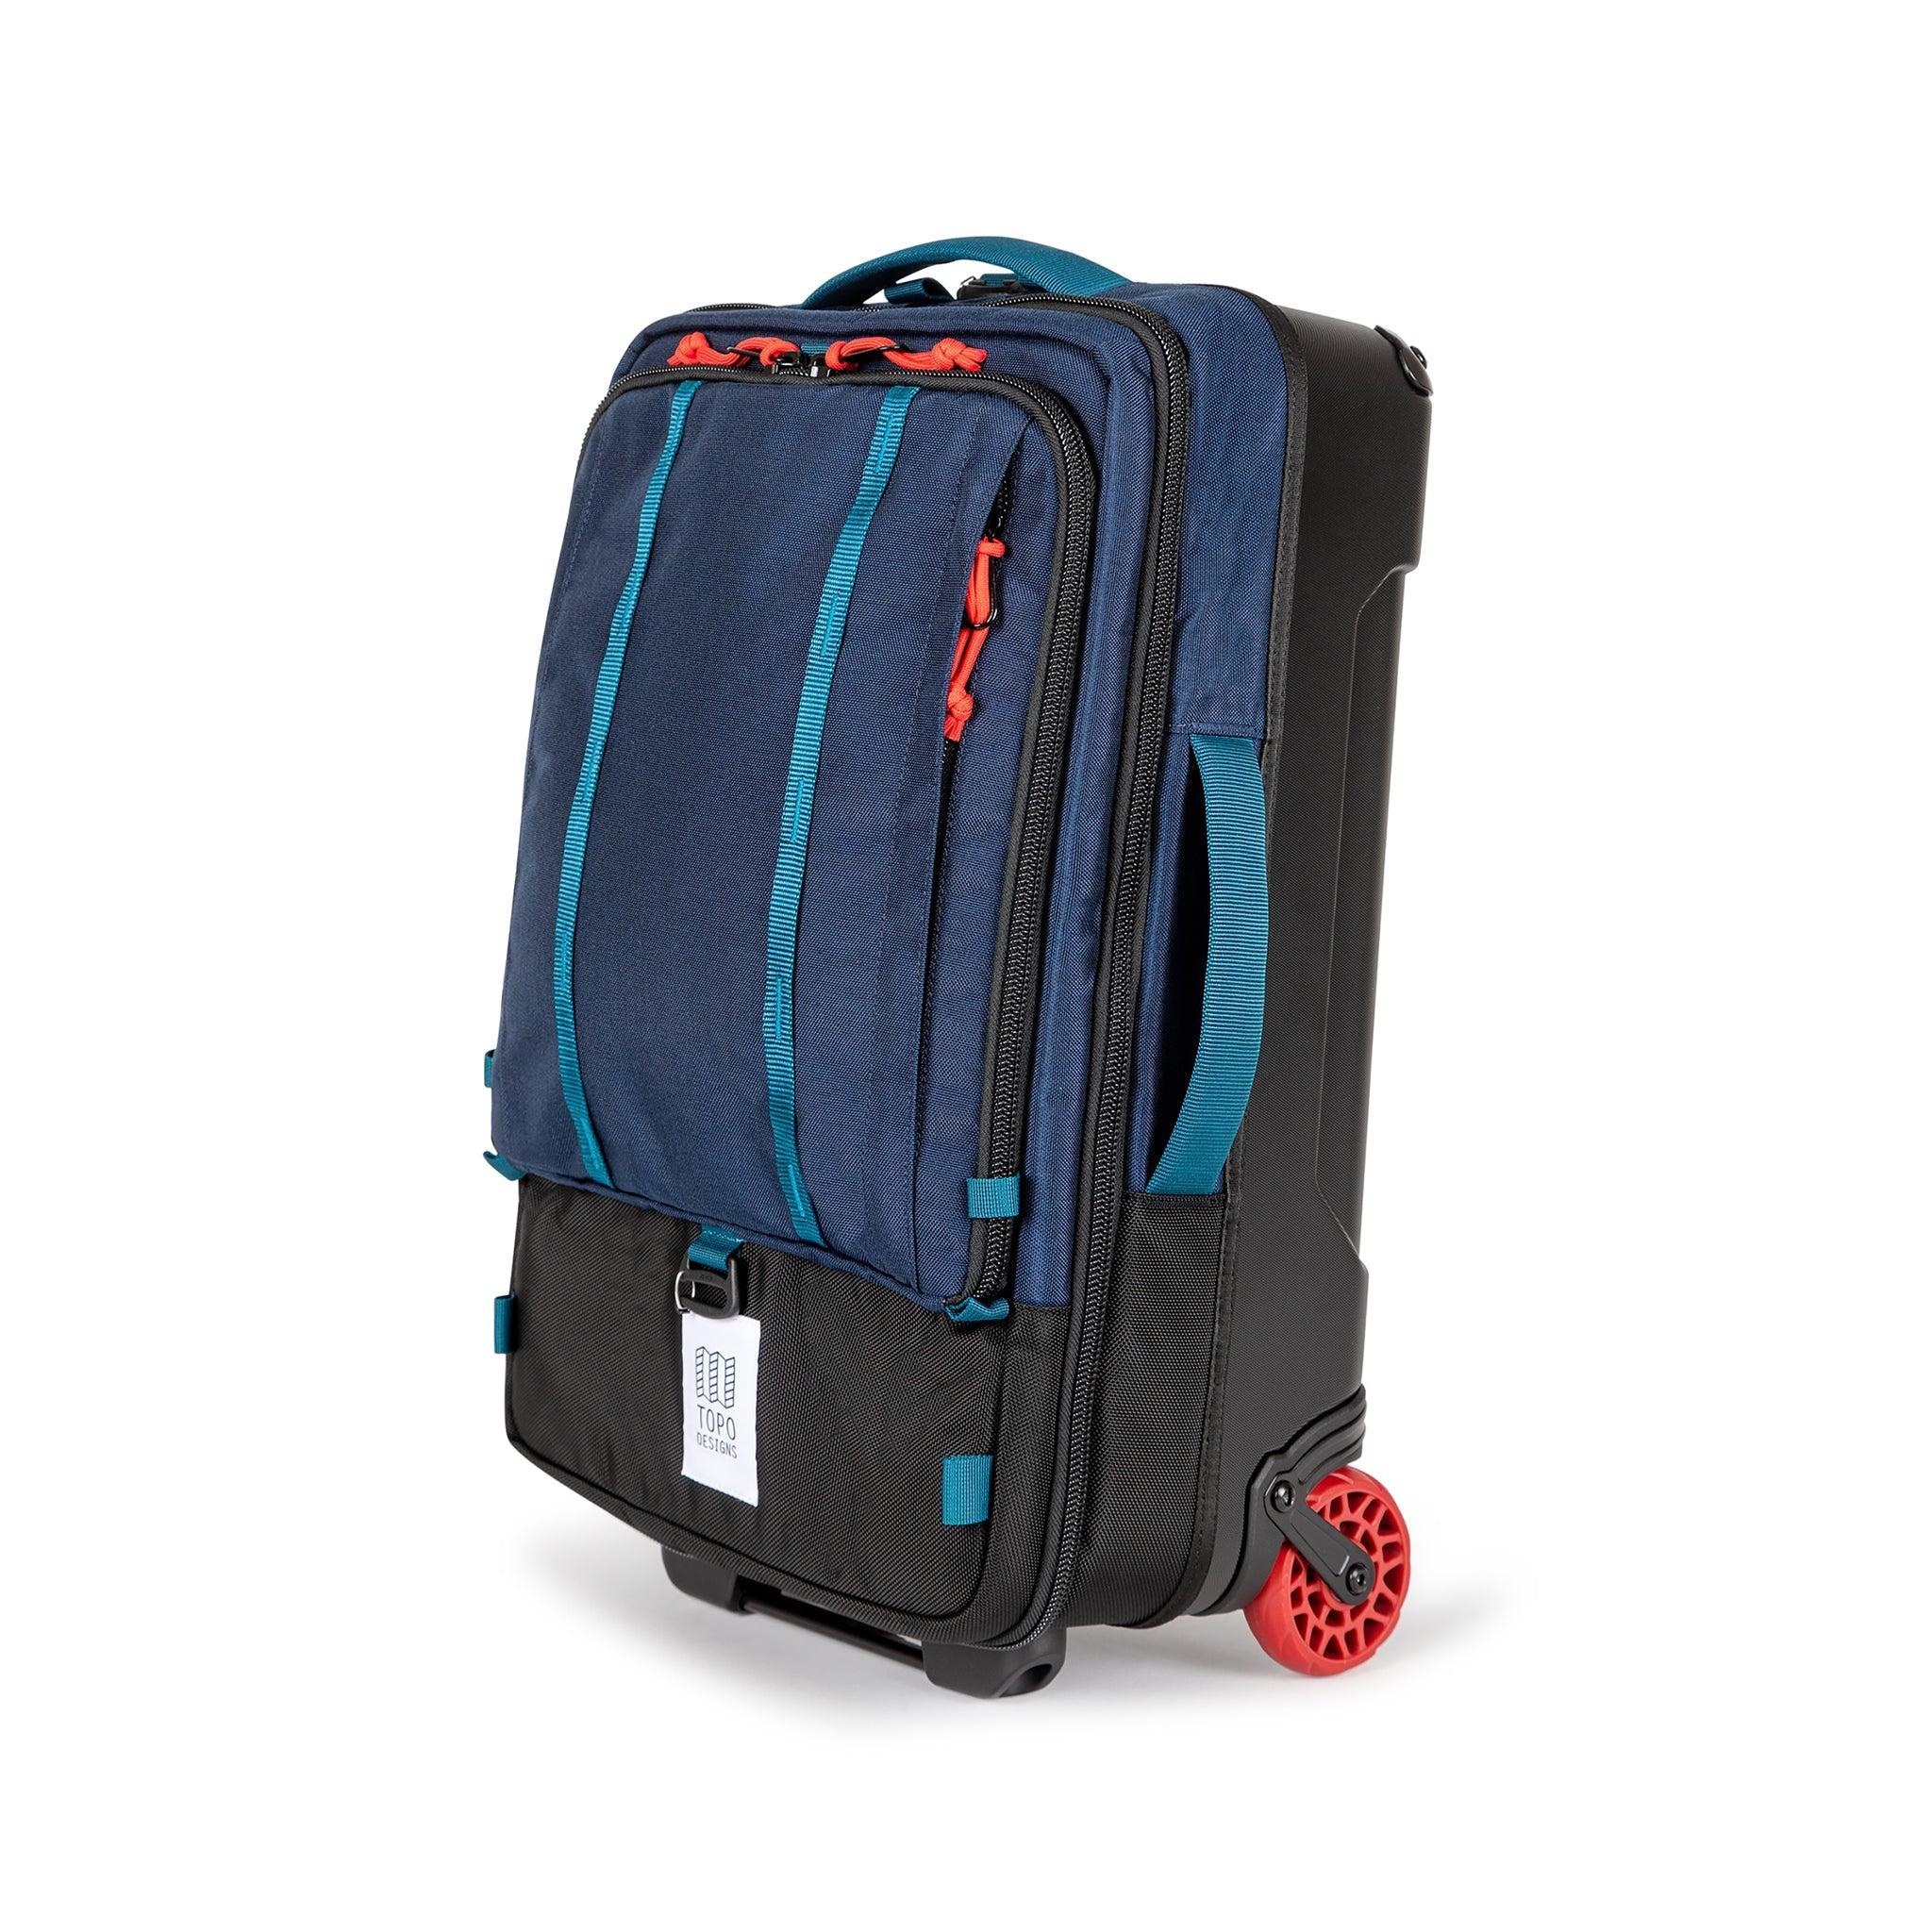 F21-Global-Travel-Bag-Roller-Product-8_2x_7e6e8ef6-425e-4c52-9ad3-d9d5e6a23f61.jpg